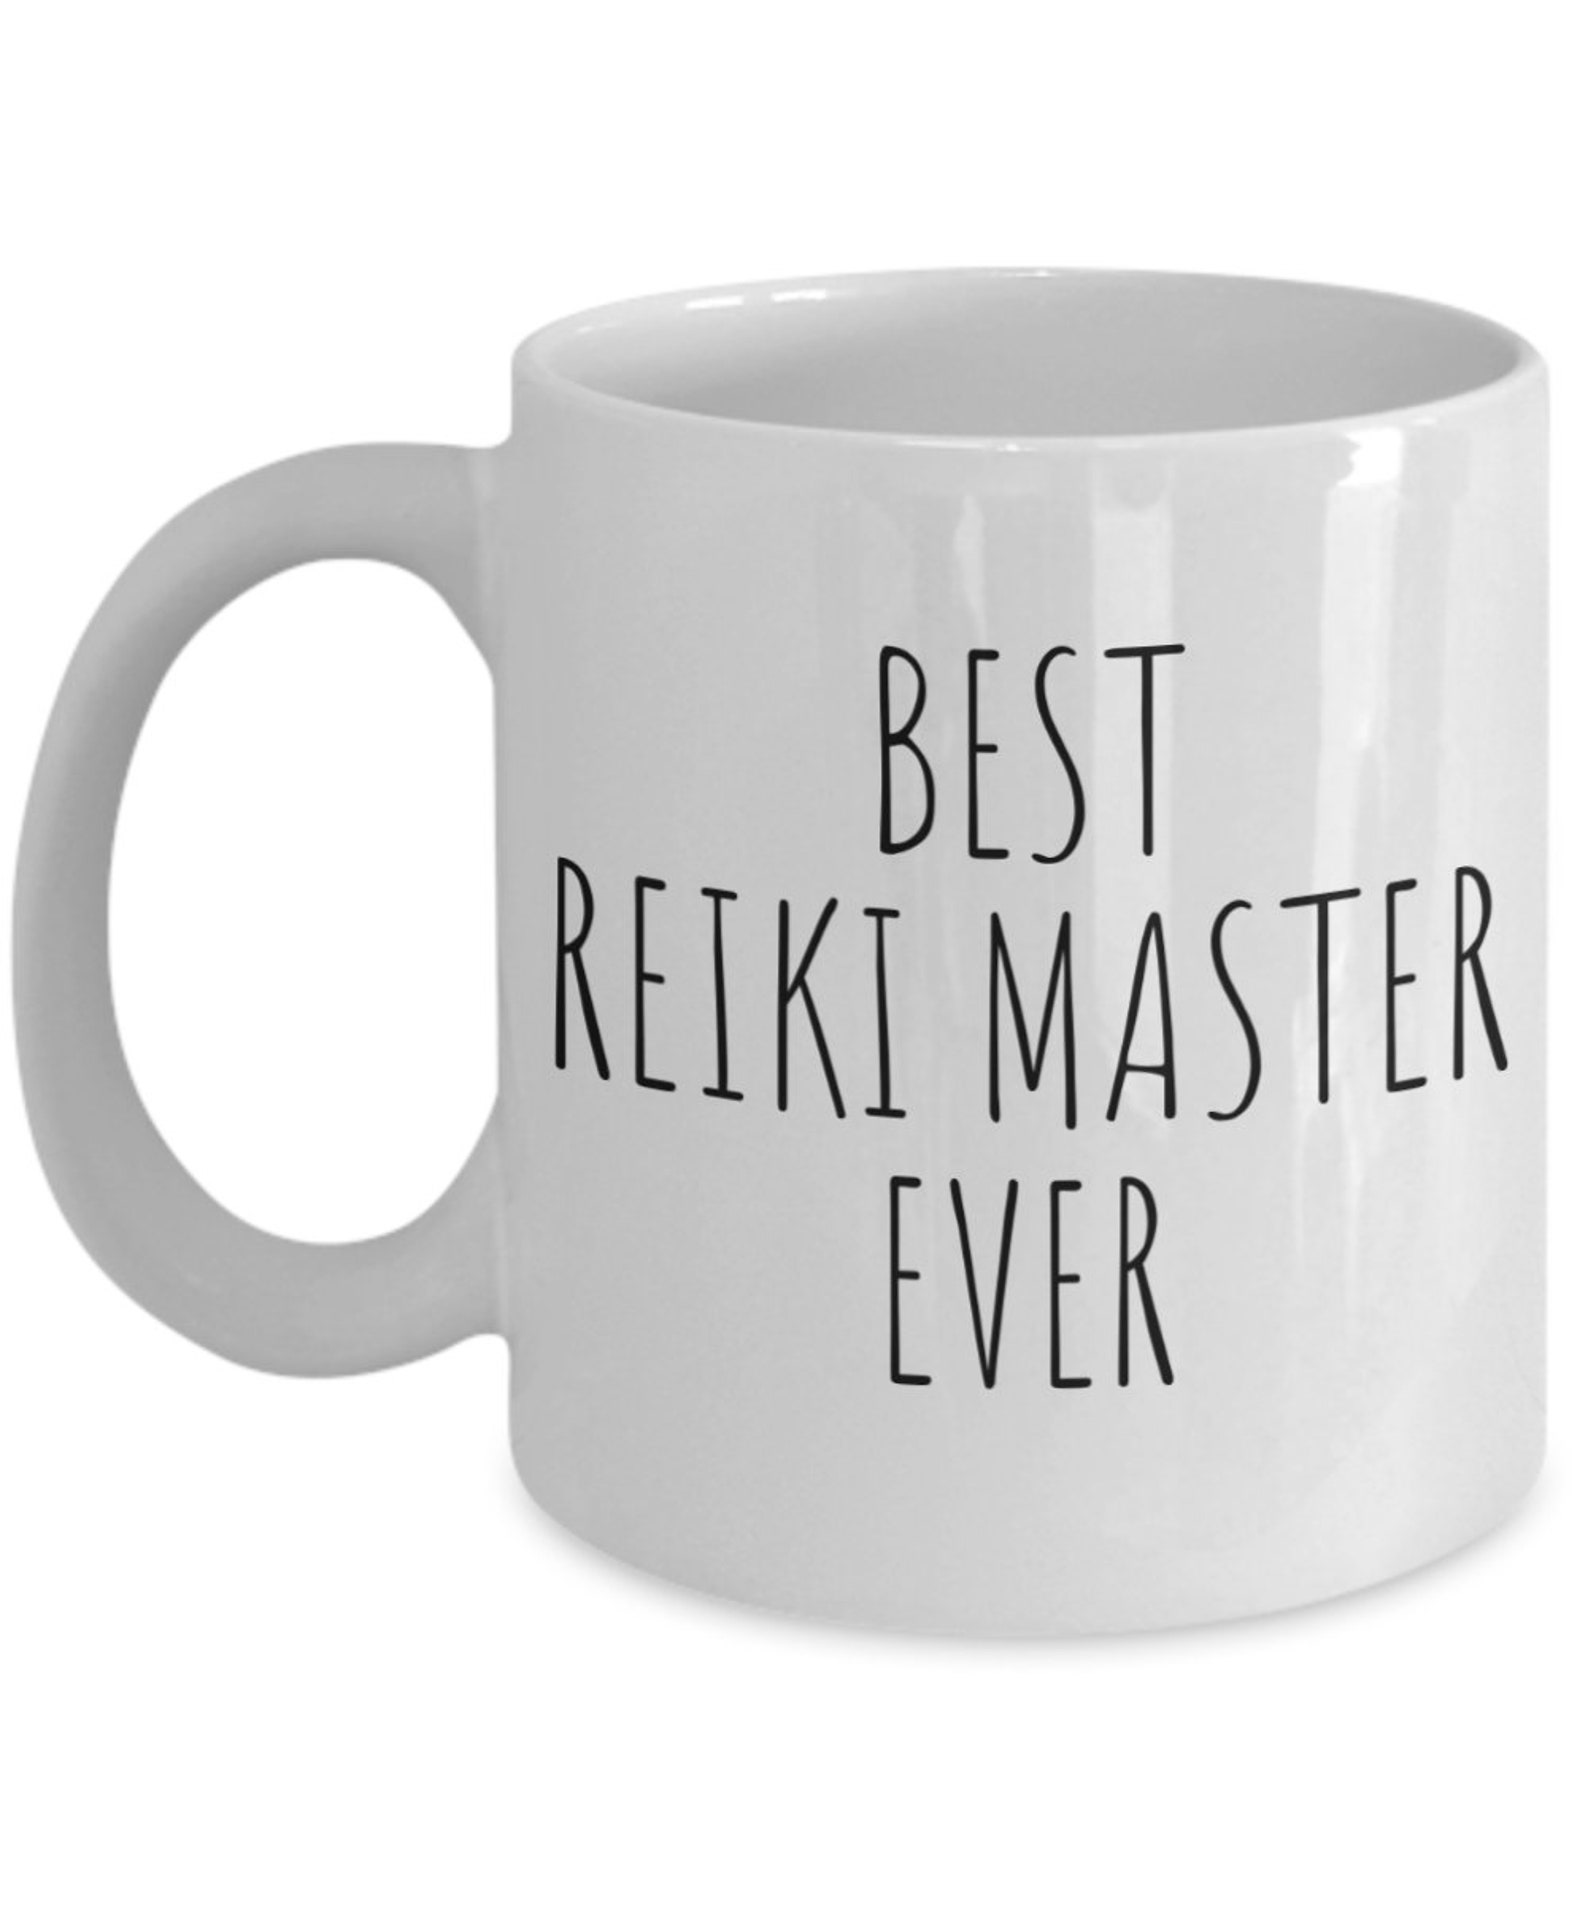 best-reiki-master-ever-mug-reiki-gifts-reiki-practitioner-etsy